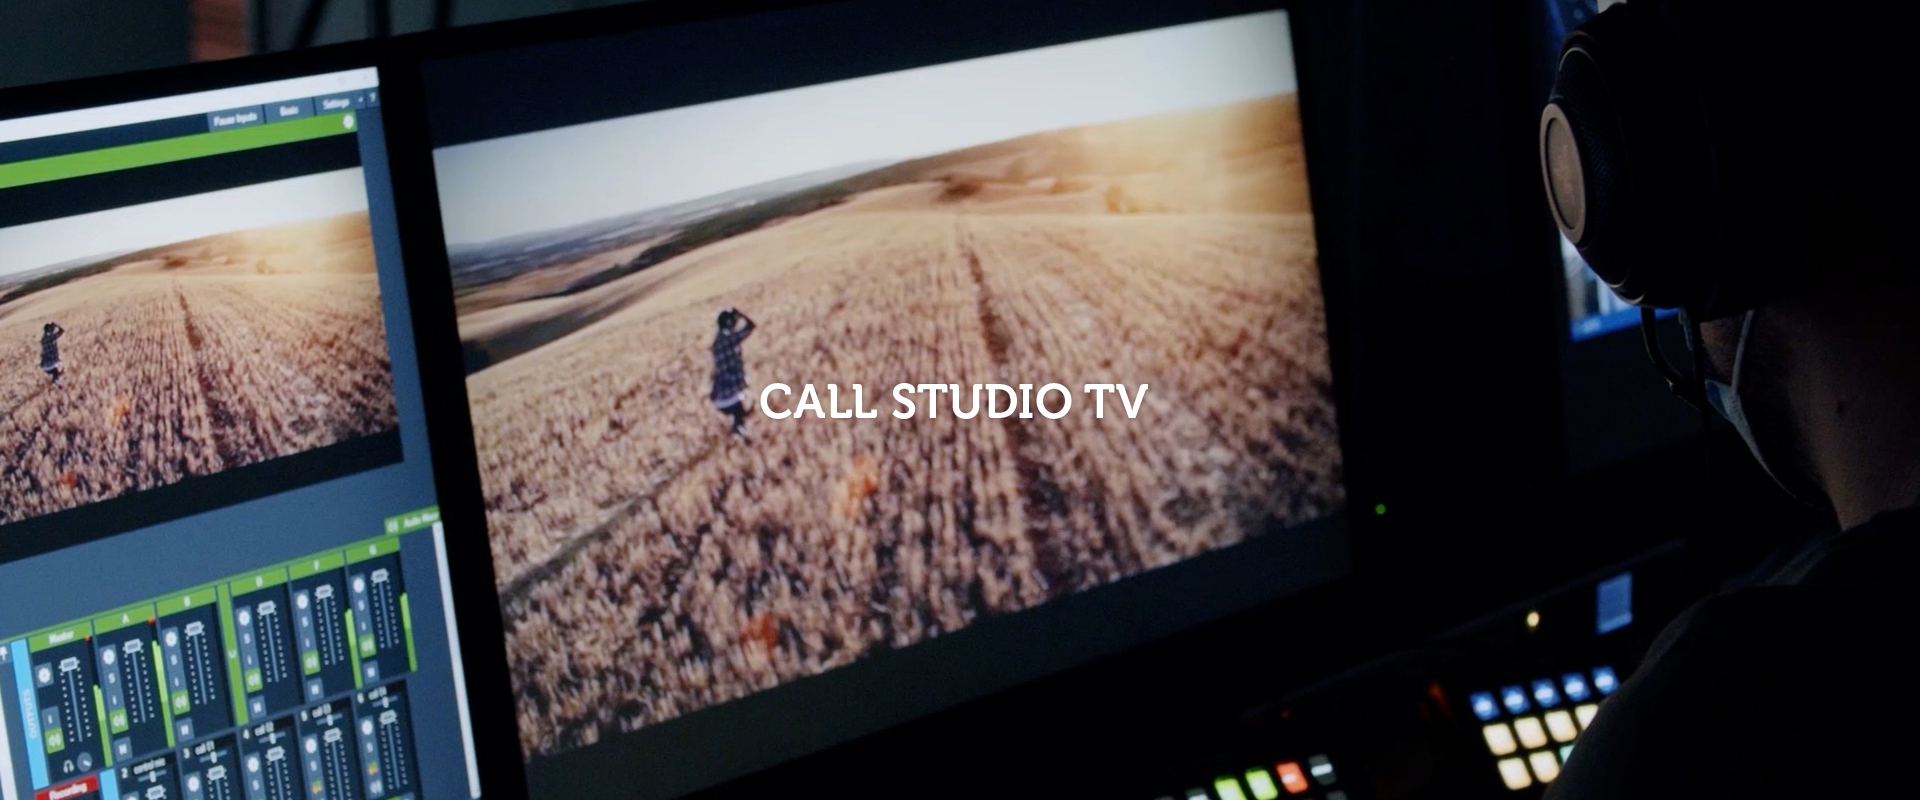 Call Studio Tv